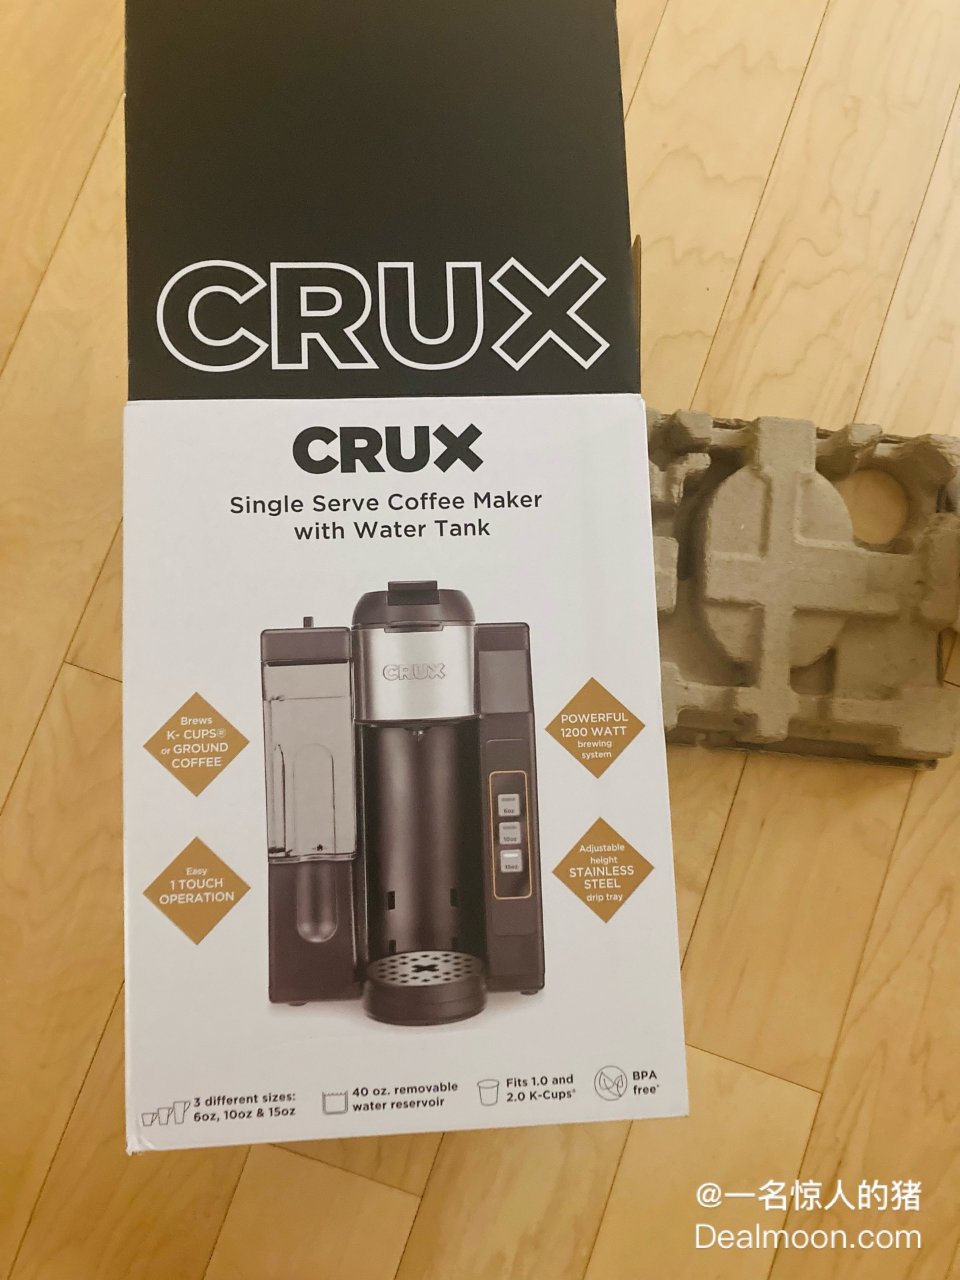 CRUX Single Serve Coffee Maker - BJs Wholesale Club